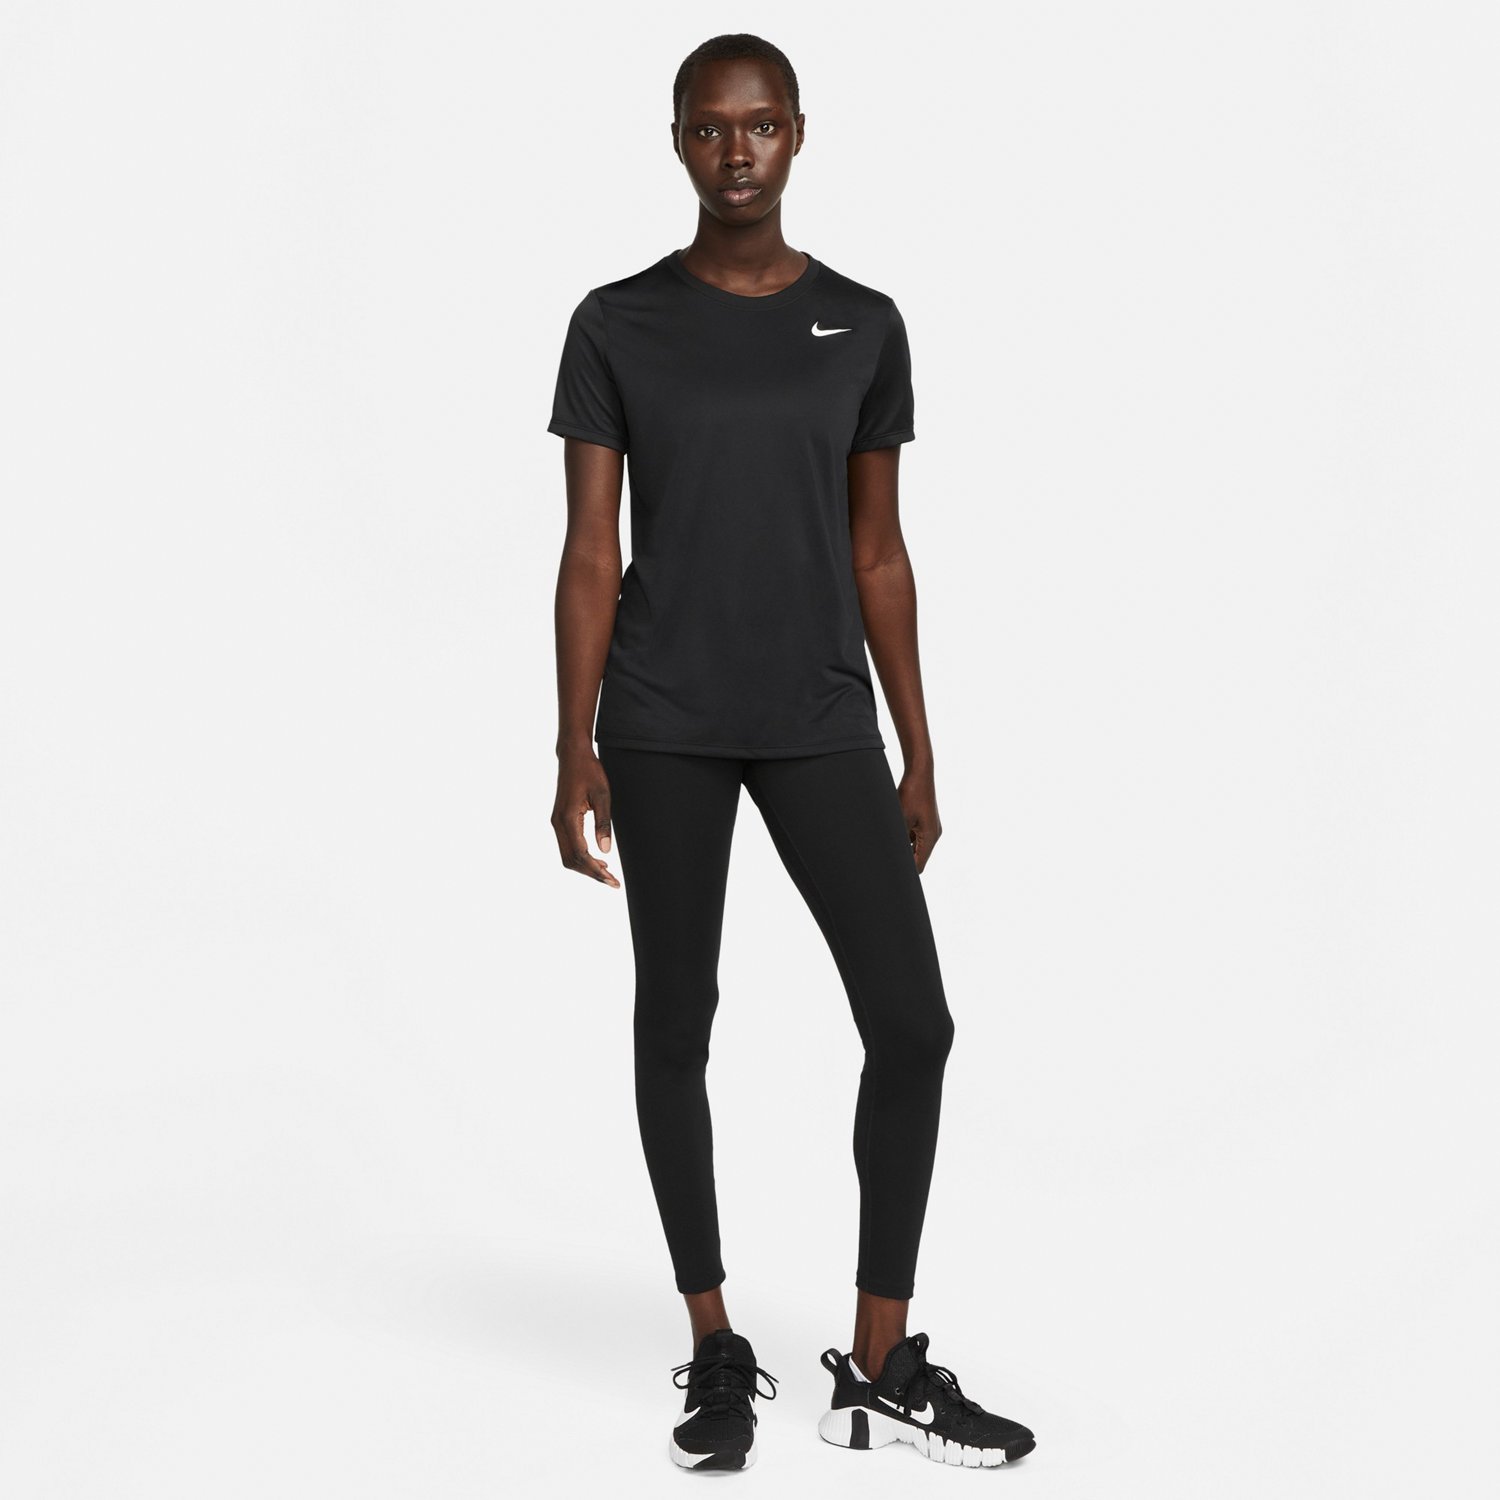 Nike Womens DRI-FIT Legend Crew Tee - DK GREY HEATHER/BLACK, Sportsmart